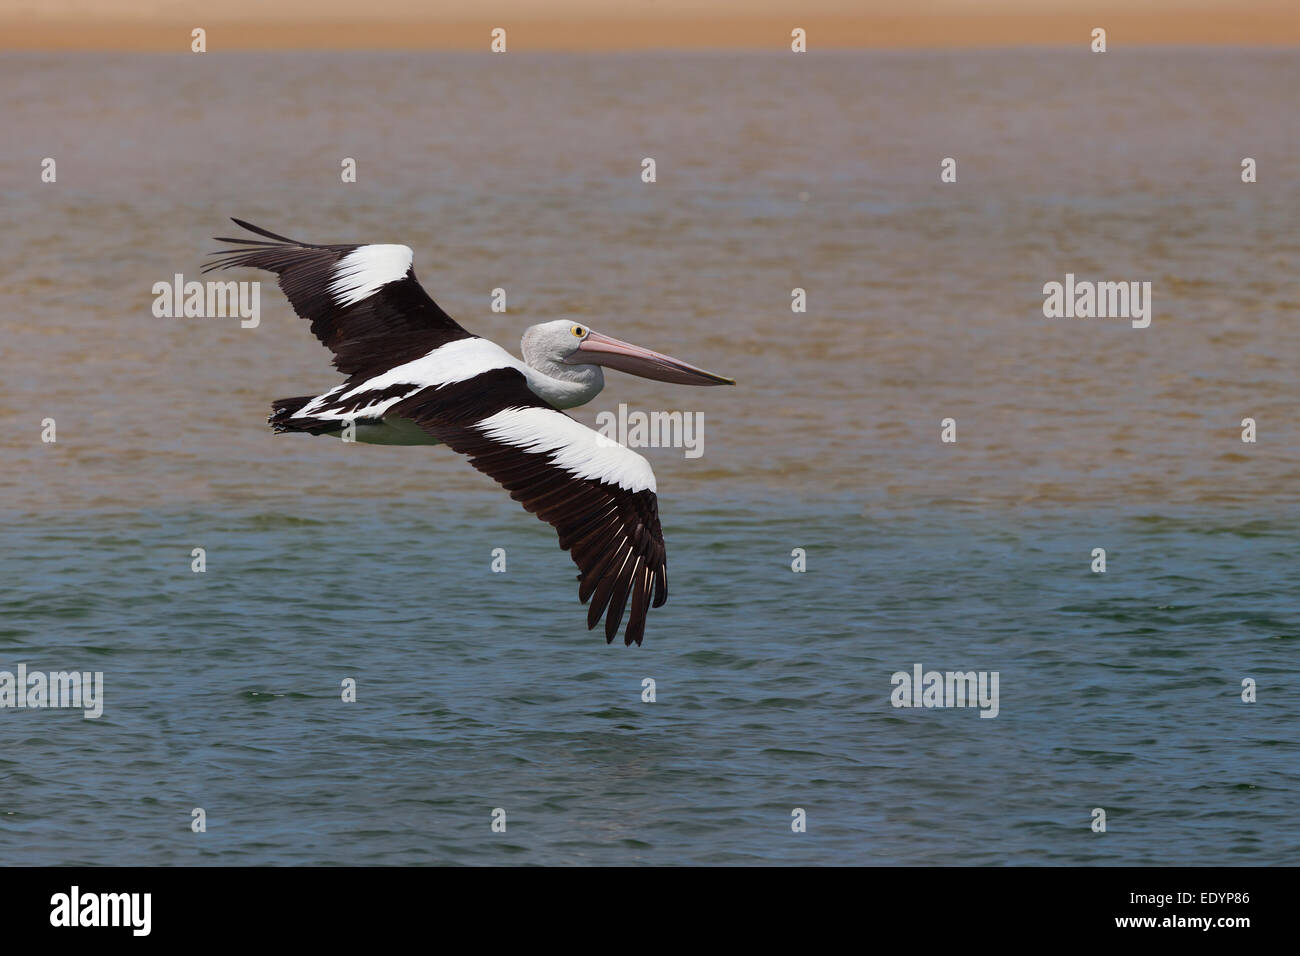 Pelican in flight, Australia Stock Photo